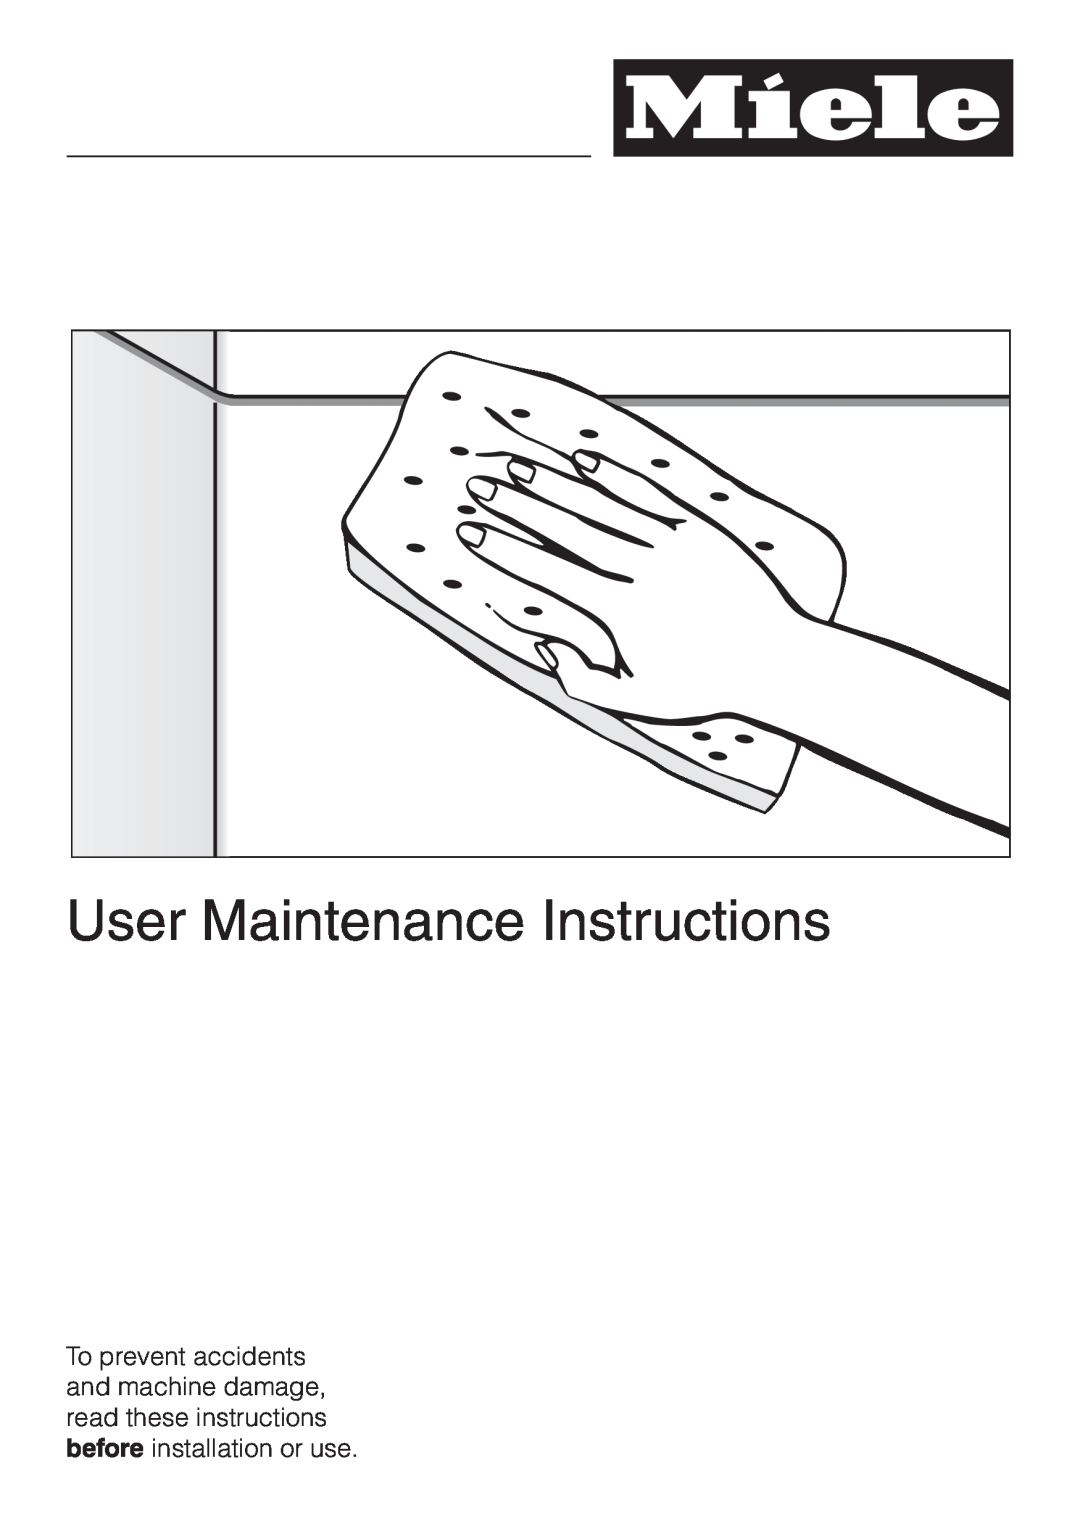 Miele G 2140 manual User Maintenance Instructions 